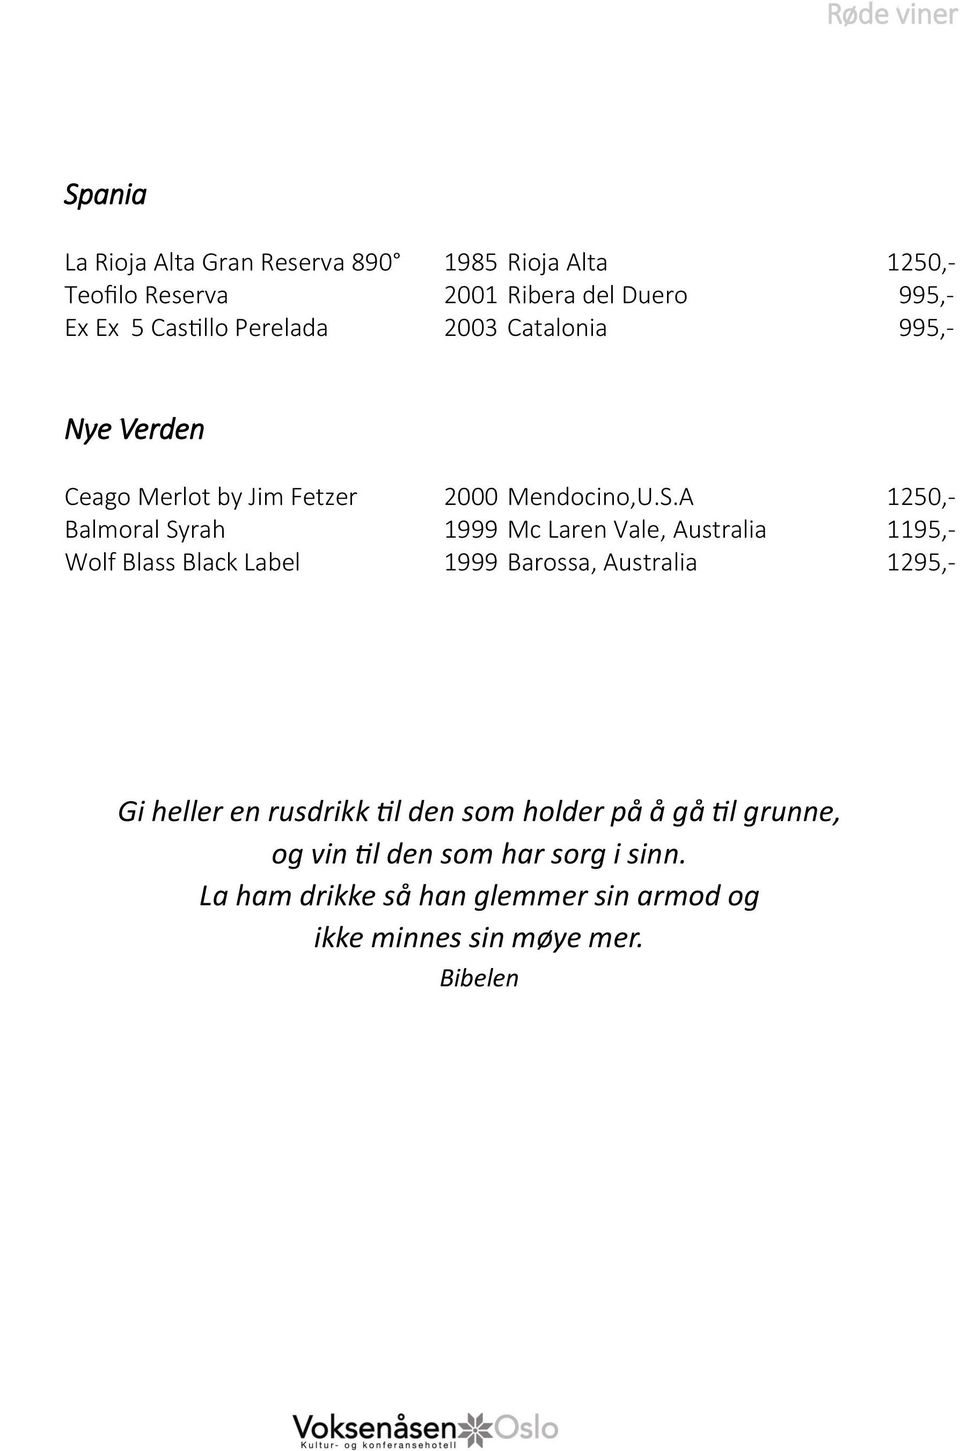 A 1250,- Balmoral Syrah 1999 Mc Laren Vale, Australia 1195,- Wolf Blass Black Label 1999 Barossa, Australia 1295,- Gi heller